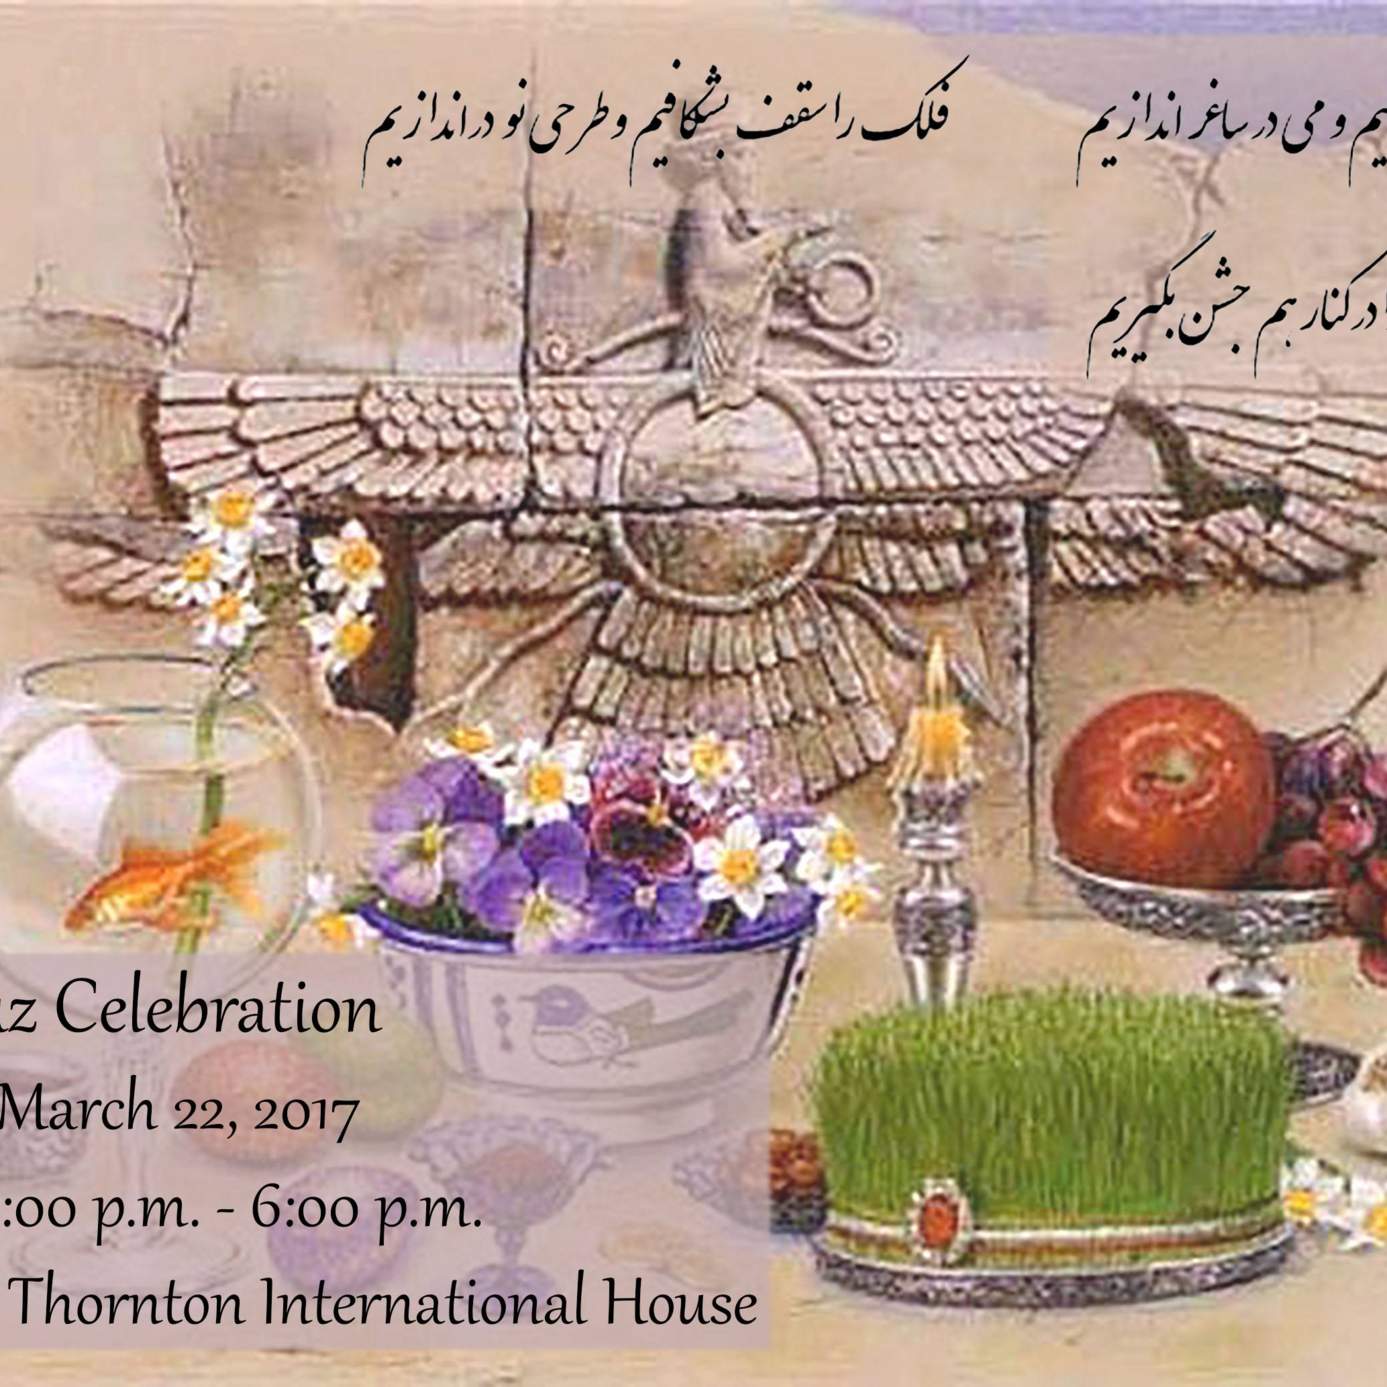 Spring 2017 Norouz Celebration flyer. March 22, 2017. 4 - 6 PM